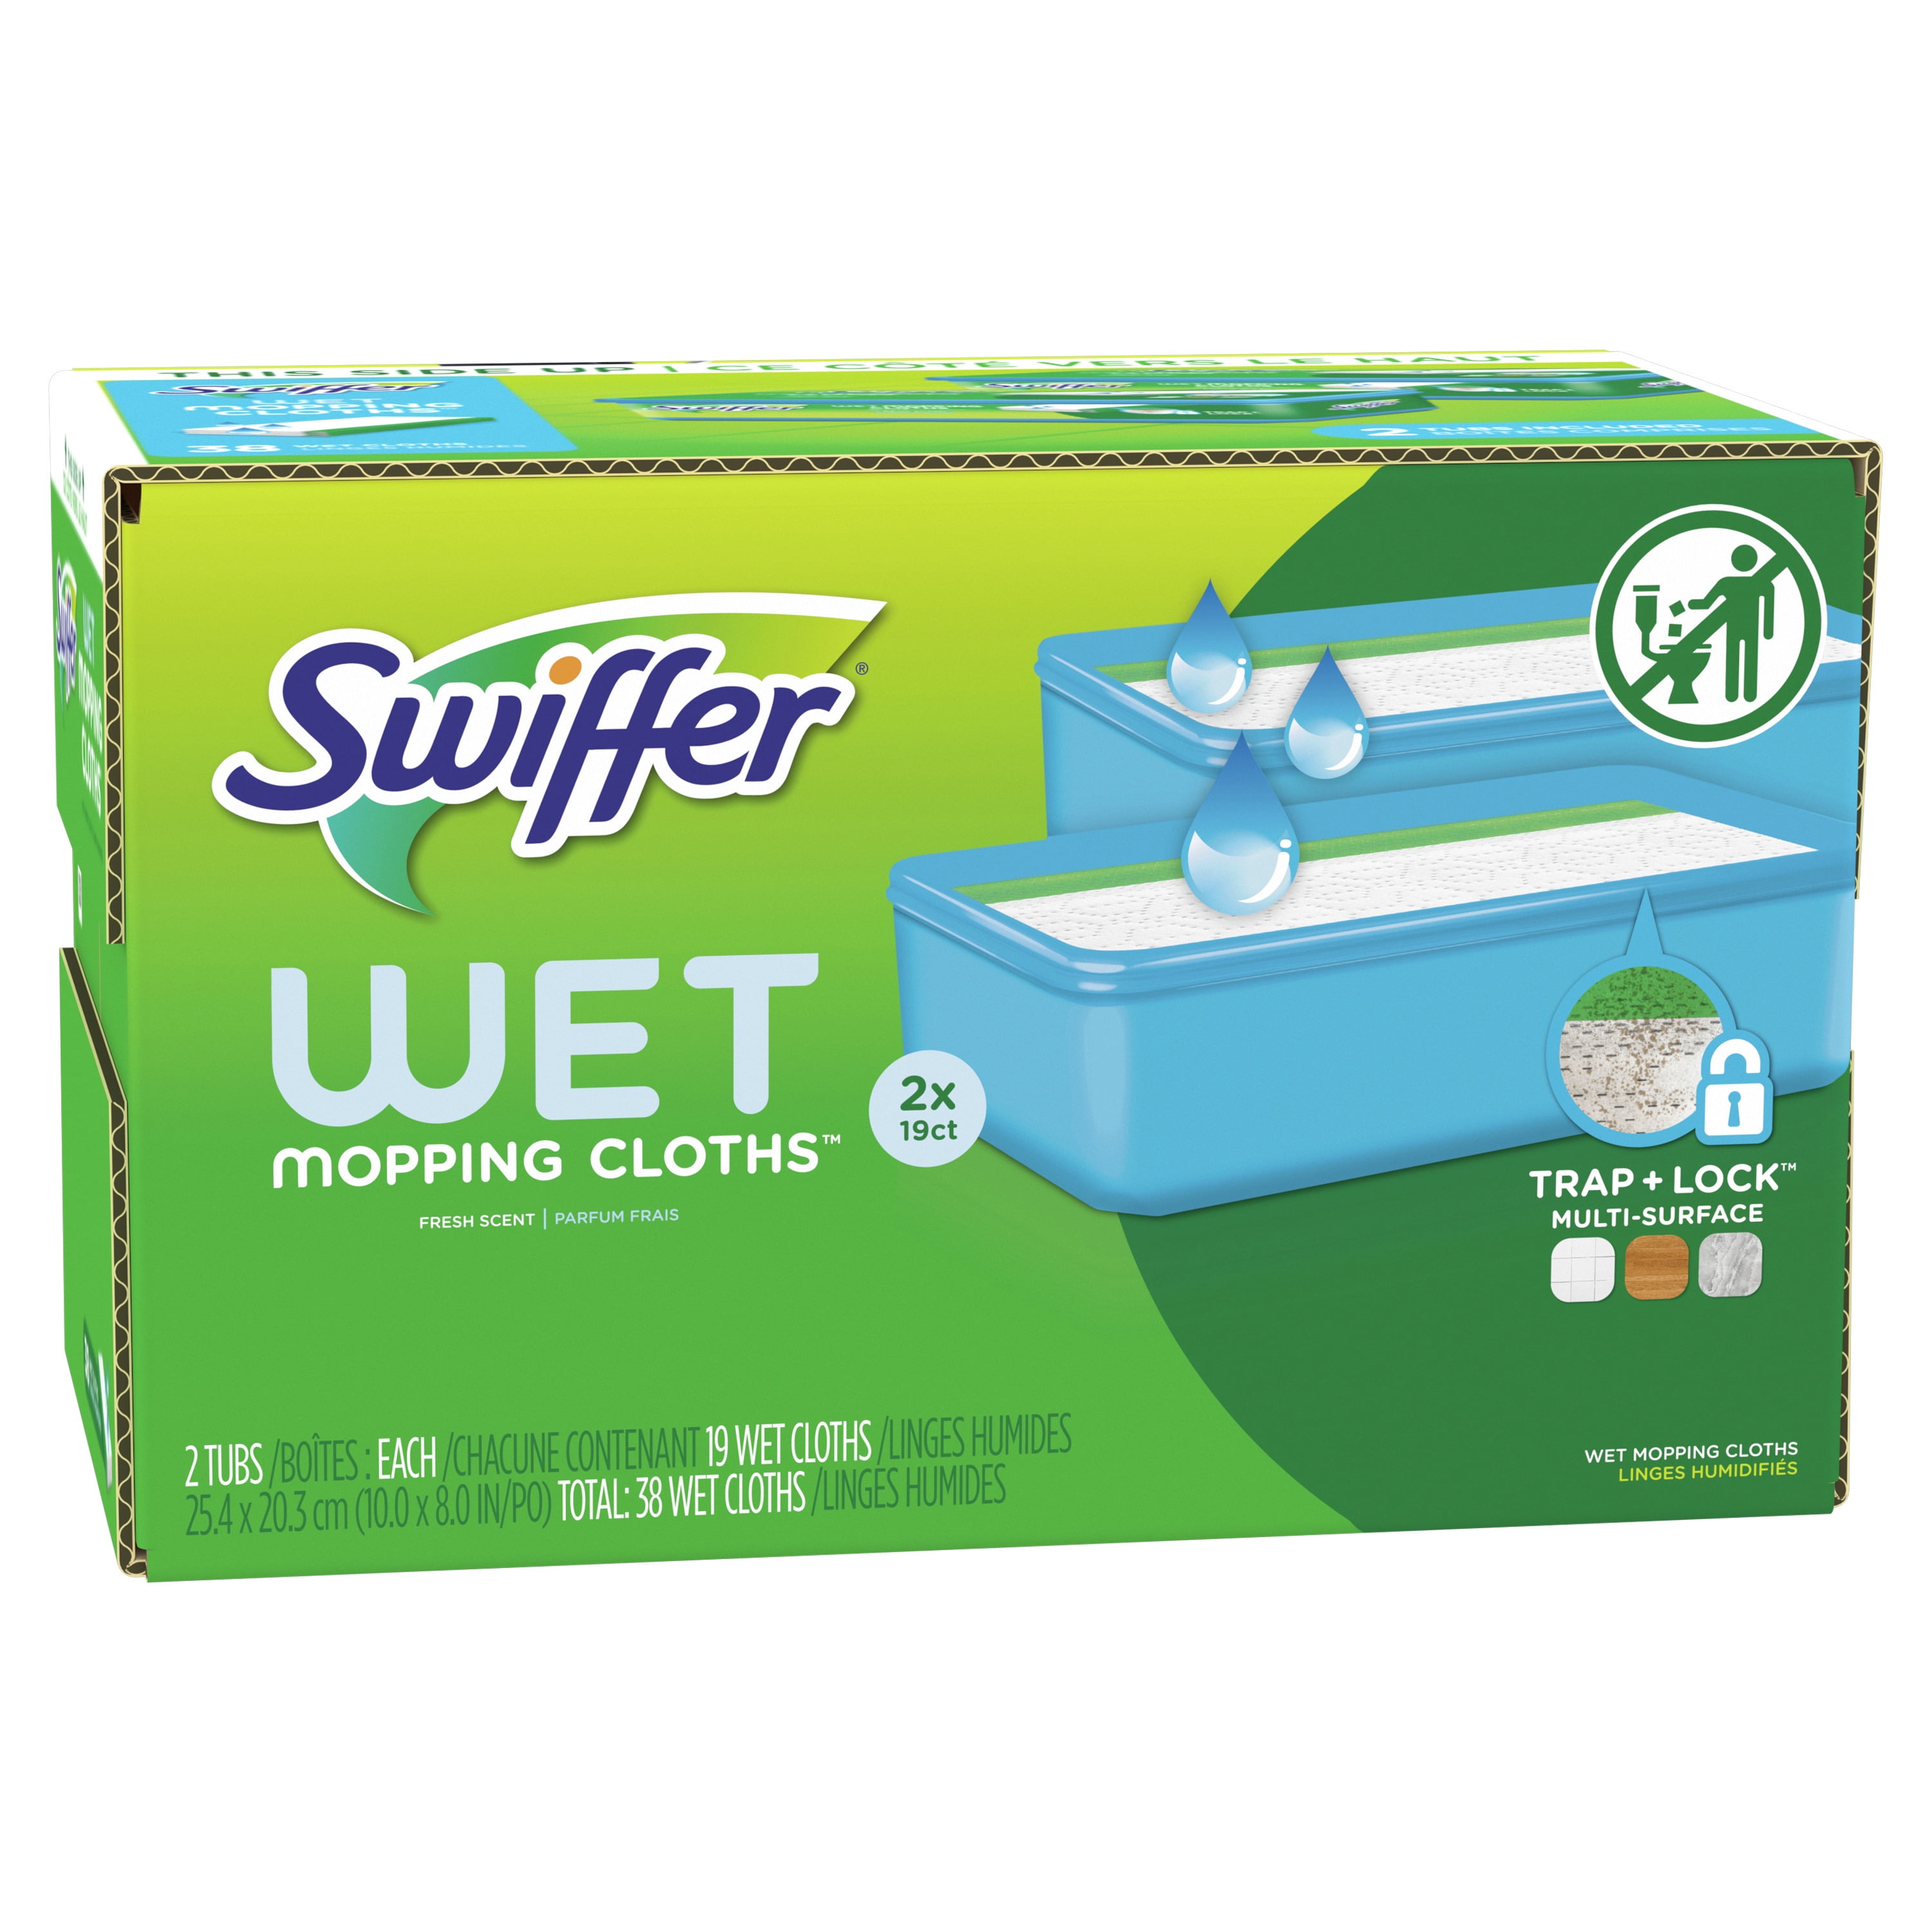 grænseflade Retaliate skæg Swiffer Wet Mopping Cloths, Fresh Scent, 19 Count, Pack of 2 - Walmart.com